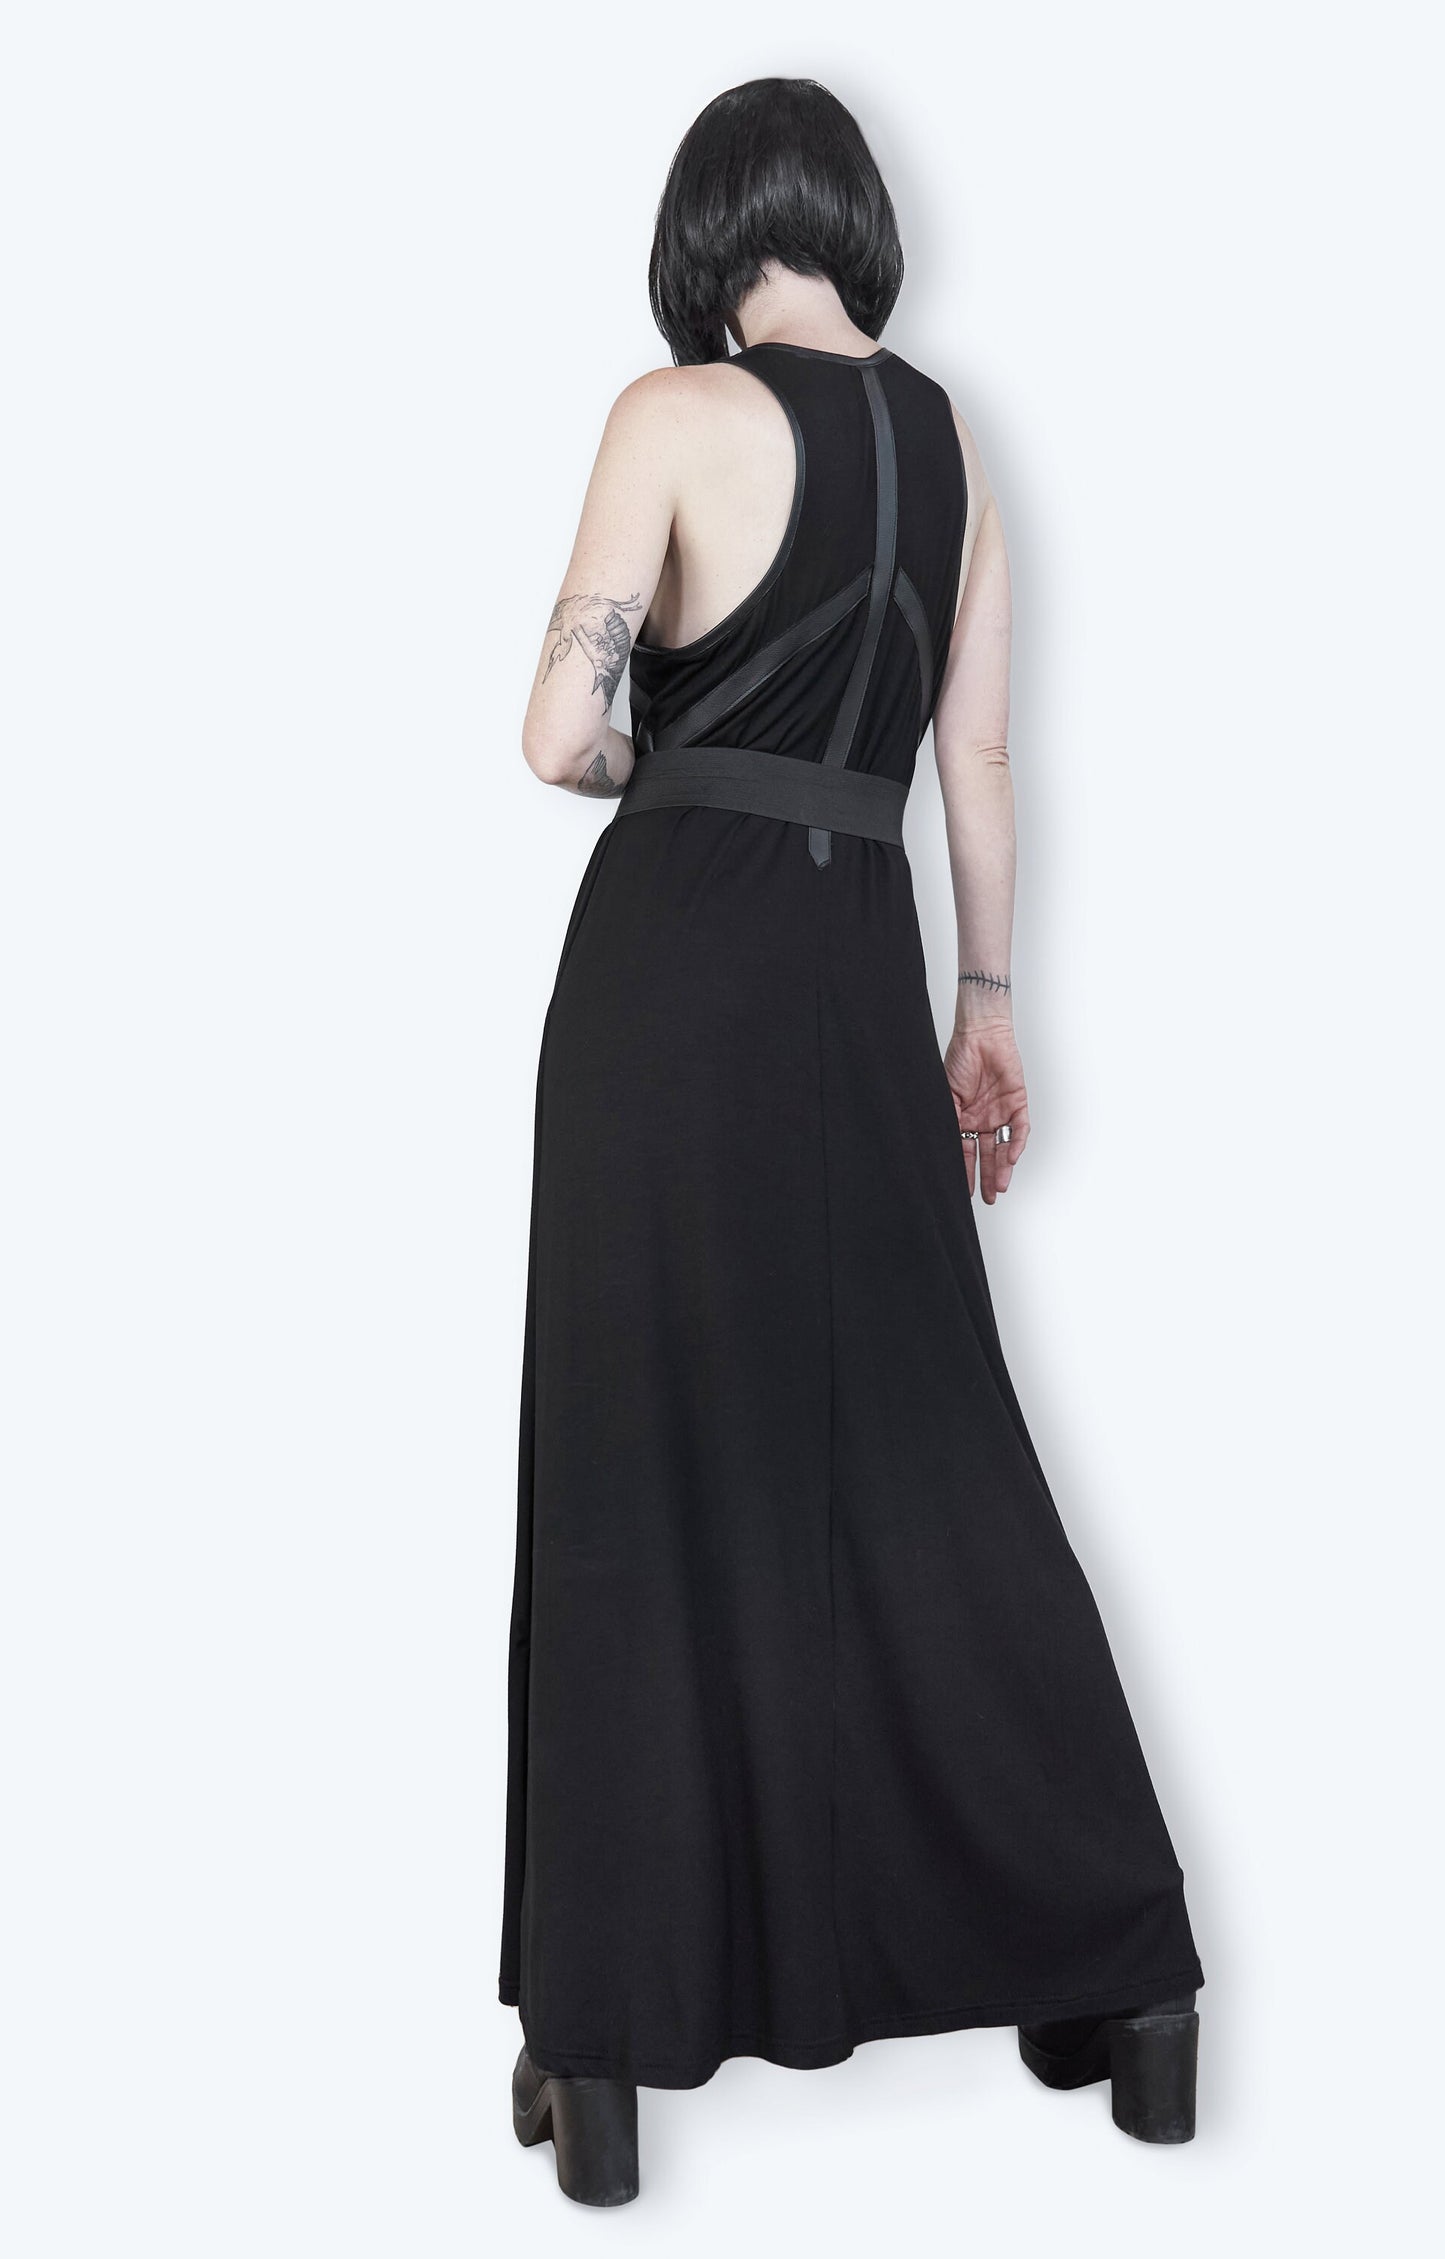 Black leather dress cutout dress summer | goth dress gothic maxi dress | goth streetwear harness dress festival dress